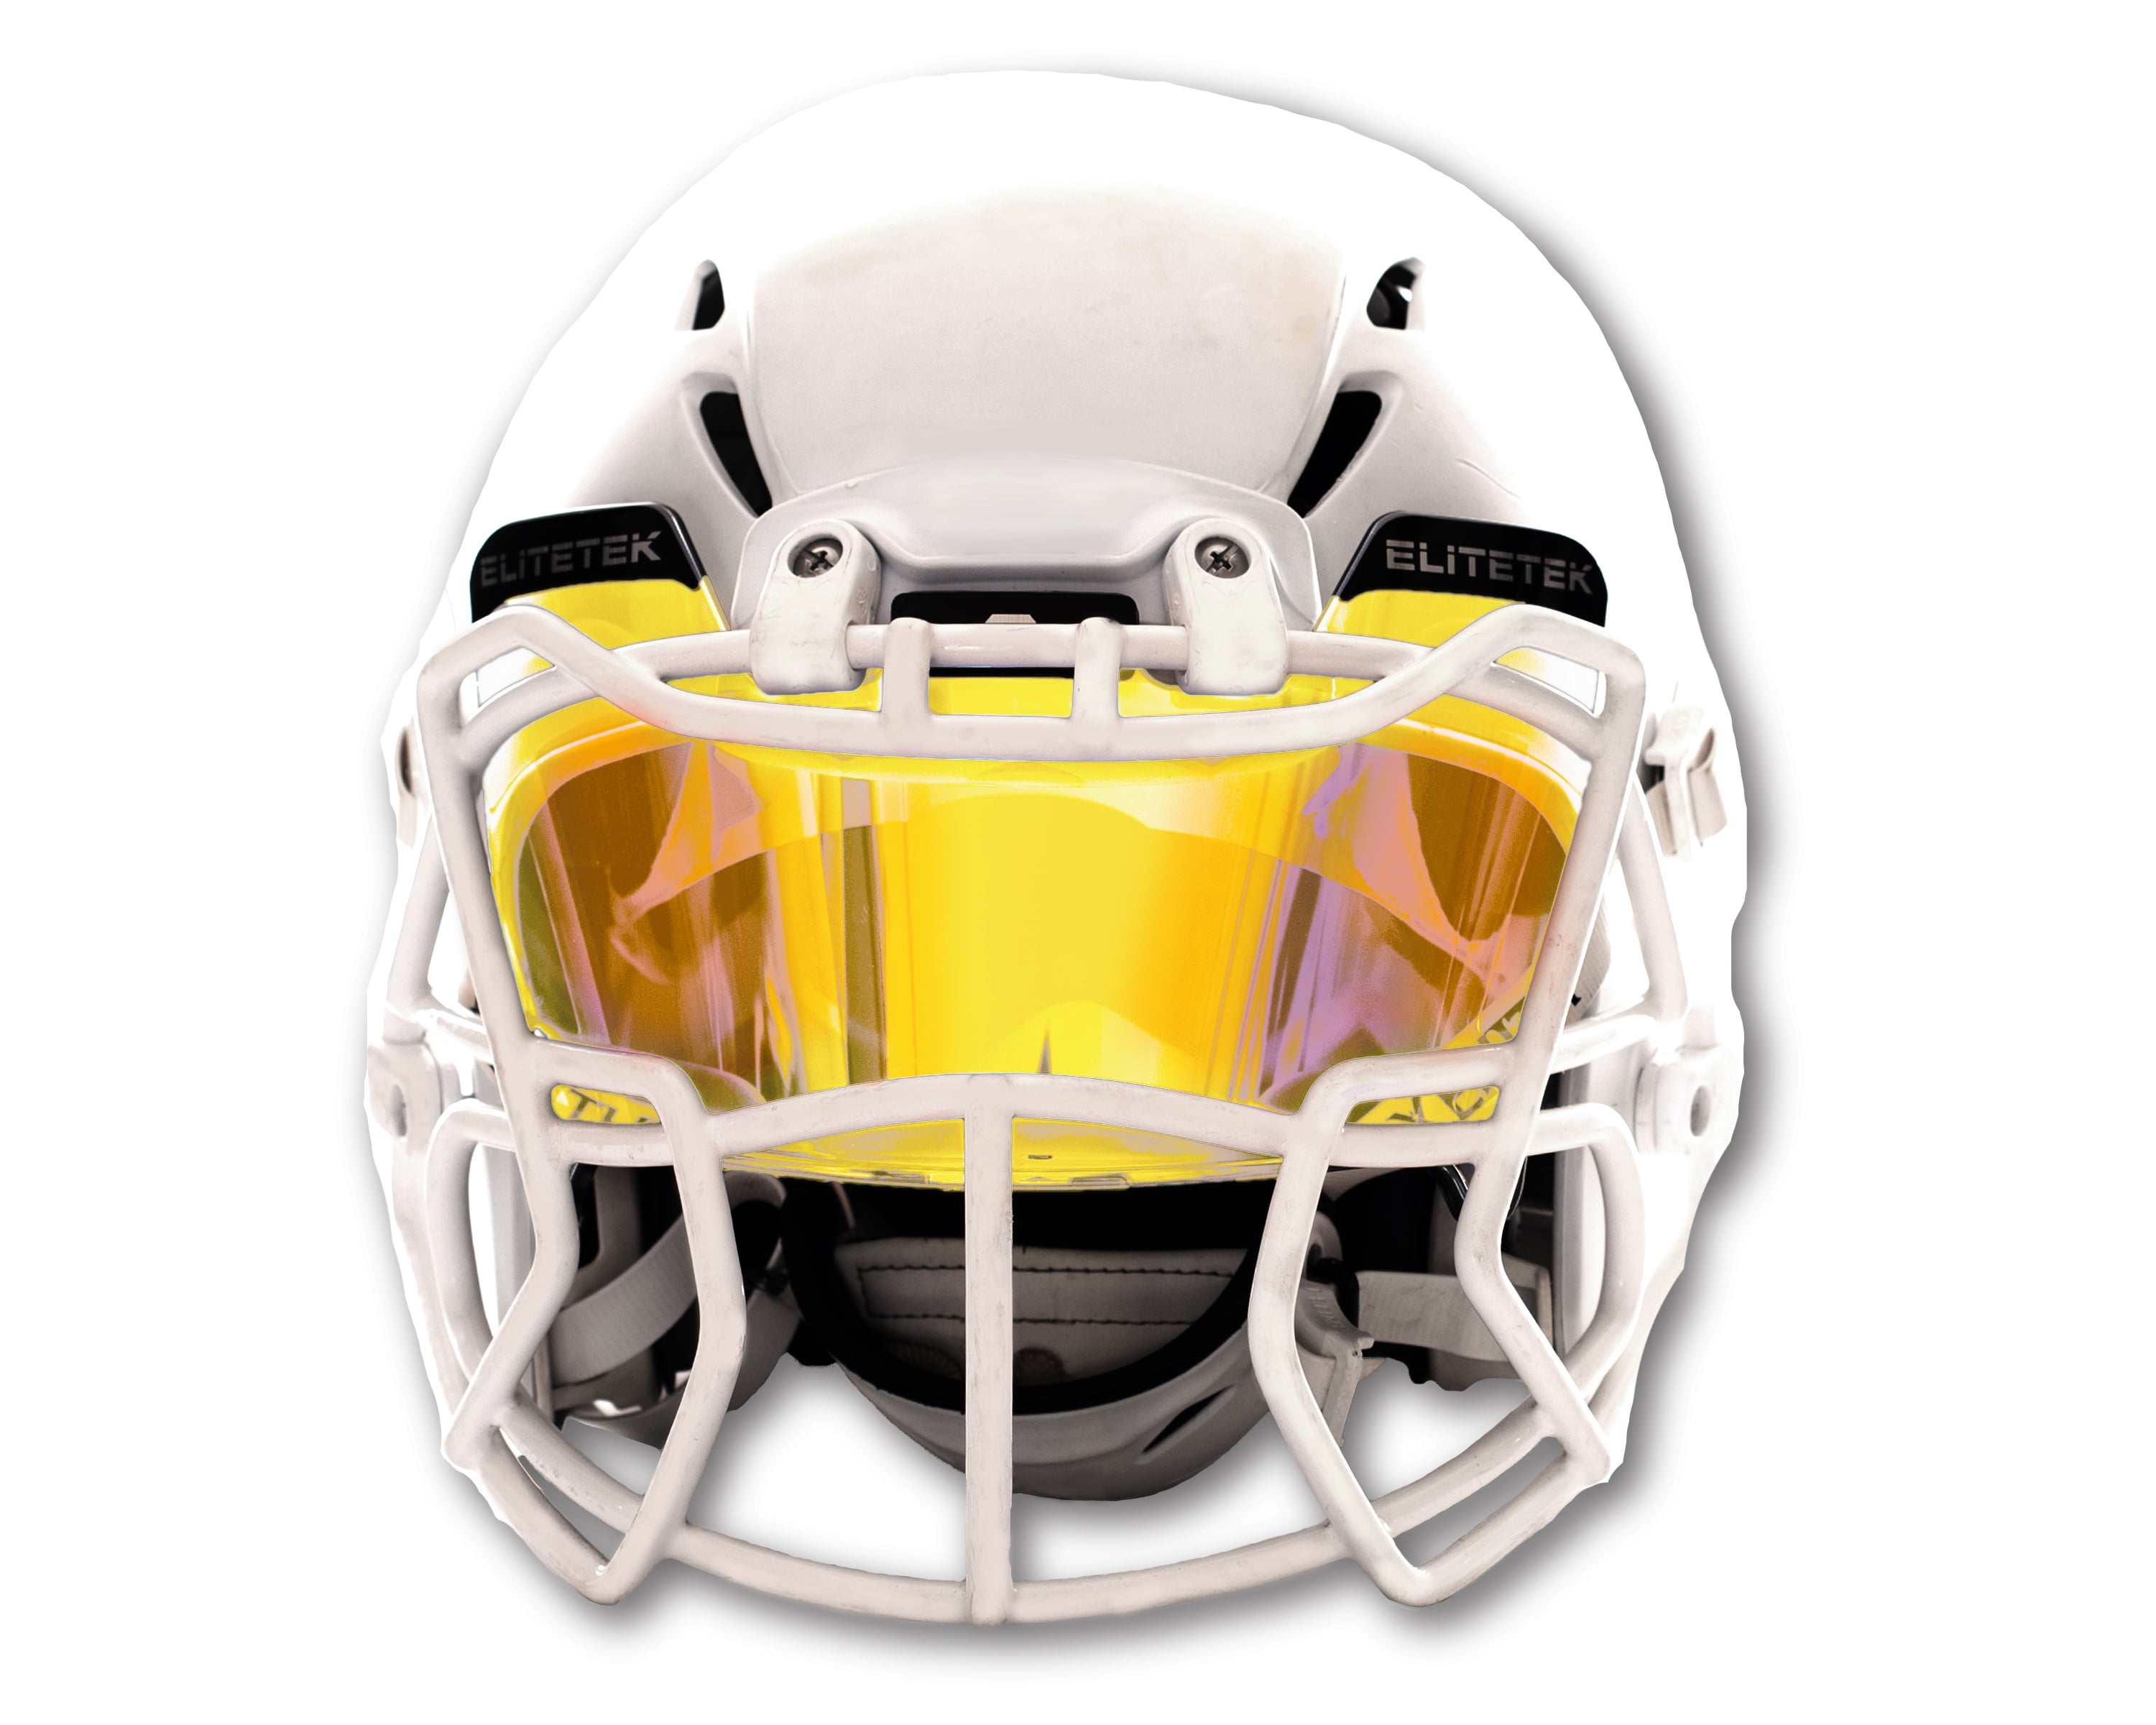 Prizm Football and Lacrosse Eye-shield Facemask Visor by EliteTek Fits Youth for sale online 